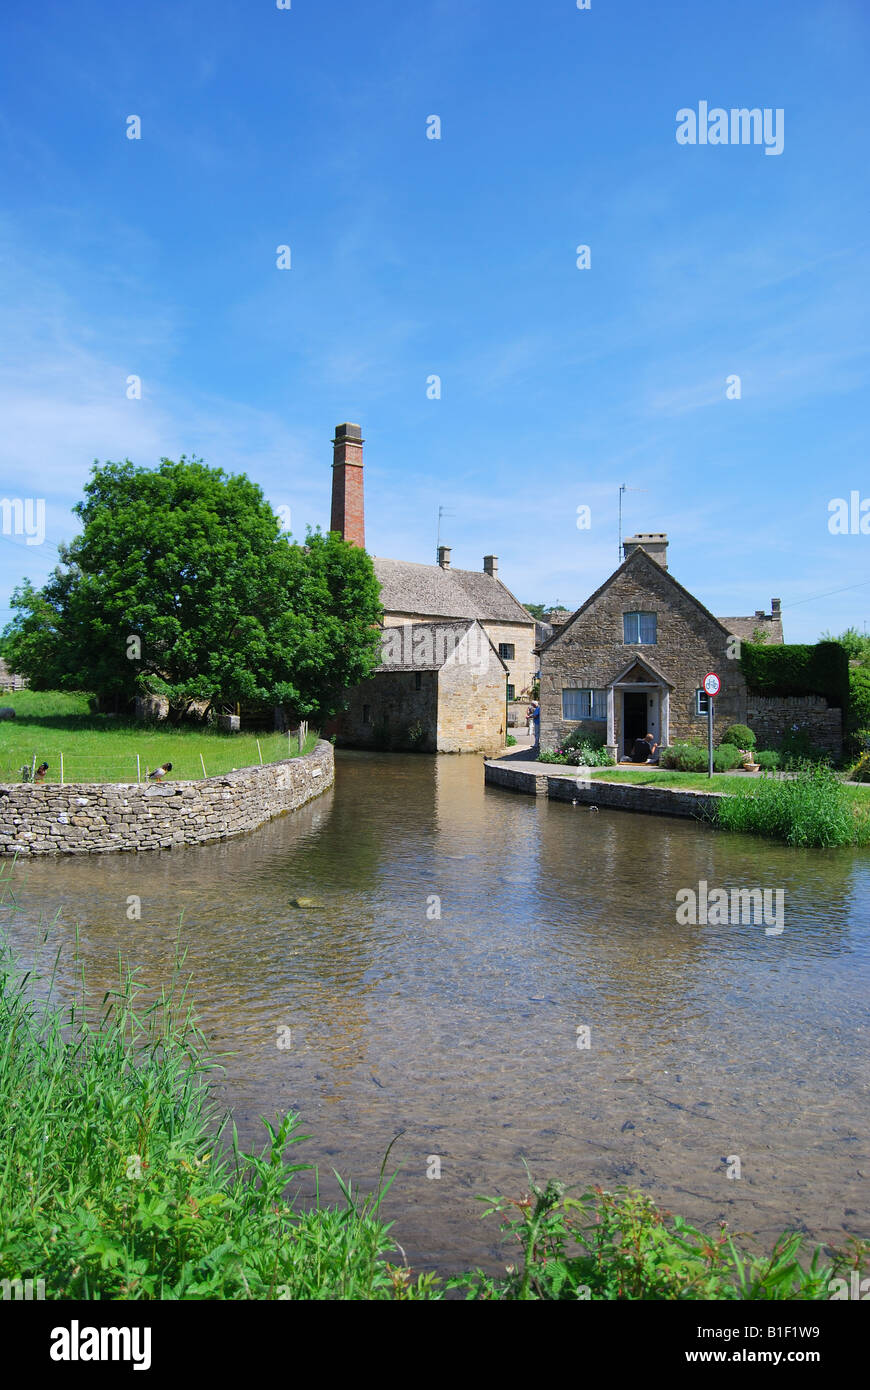 Le vieux moulin, Lower Slaughter, Cotswolds, Gloucestershire, Angleterre, Royaume-Uni Banque D'Images